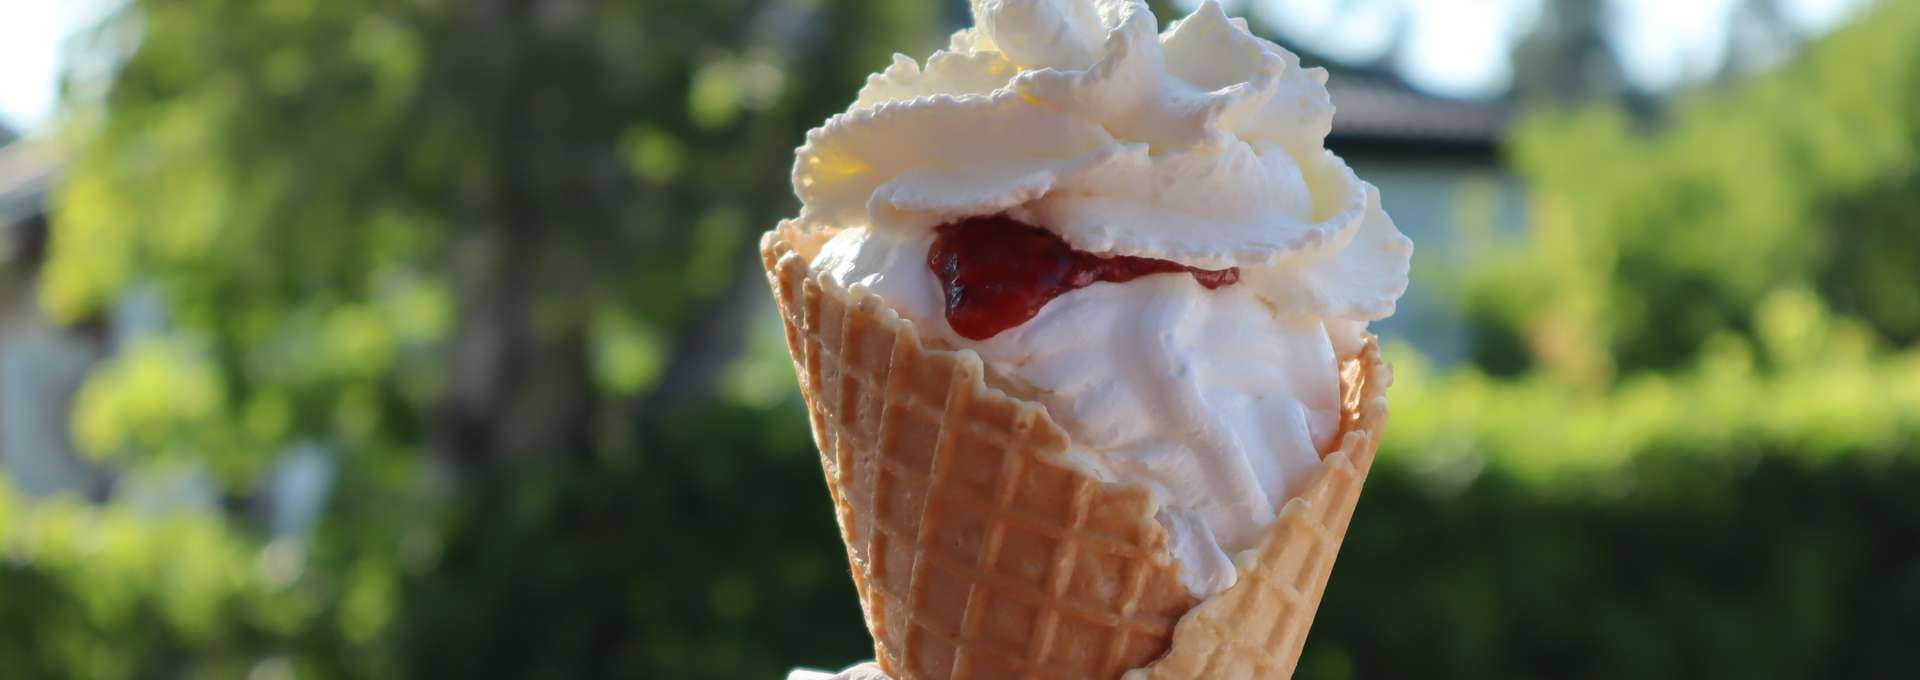 Ice cream from Slagsta Glass in Eskilstuna